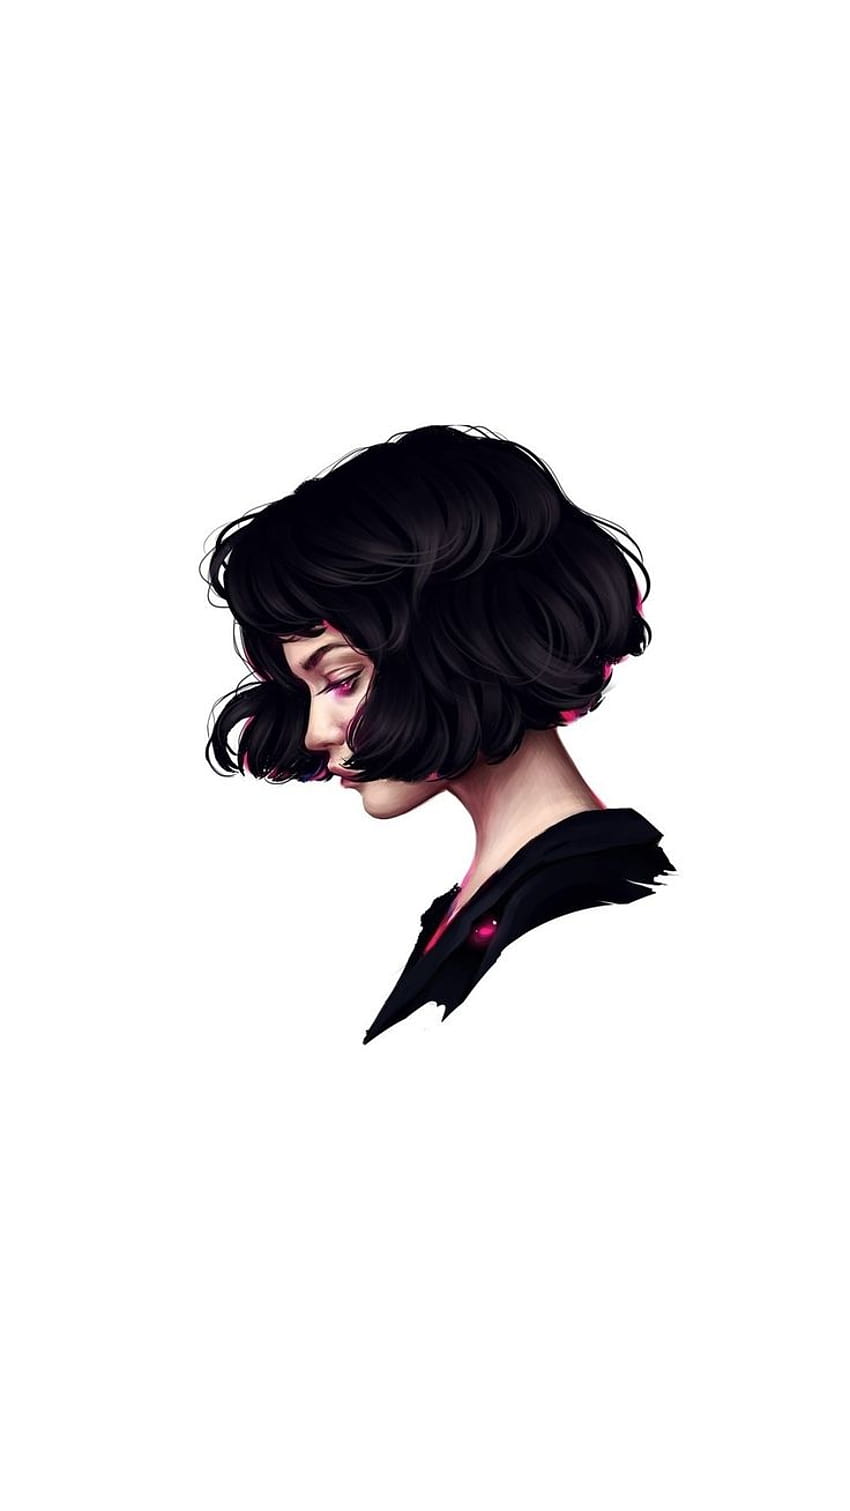 Wallpaper Black Hair Girl Art Digital Art Art Digital Painting Drawing  Background  Download Free Image